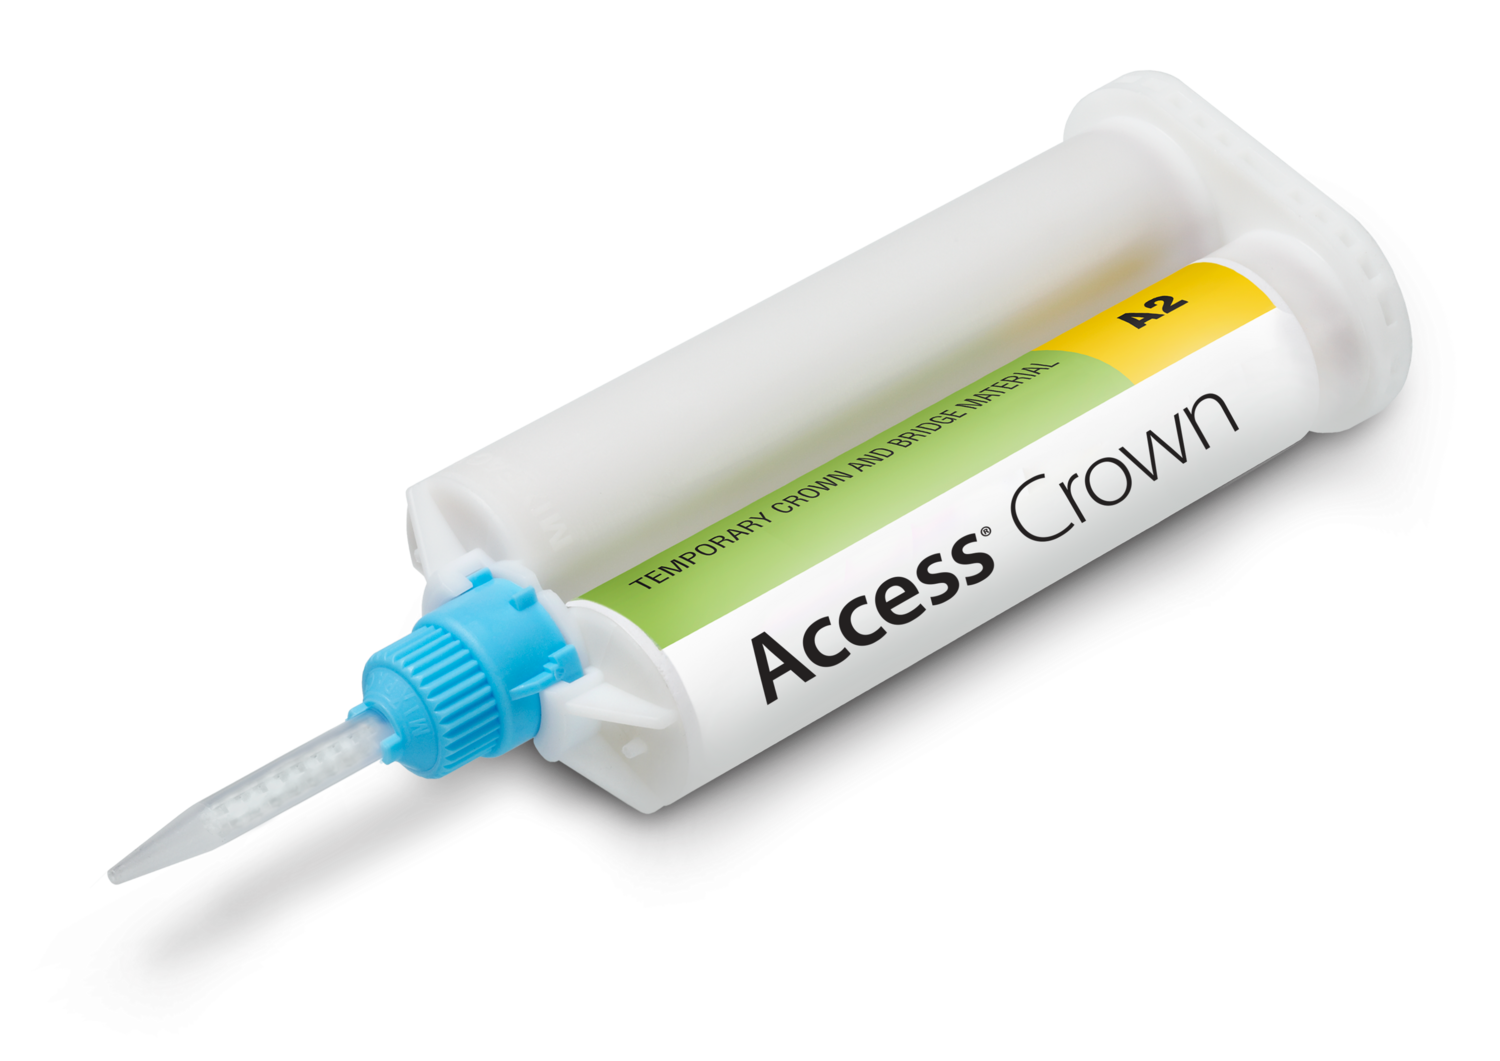 Access Crown